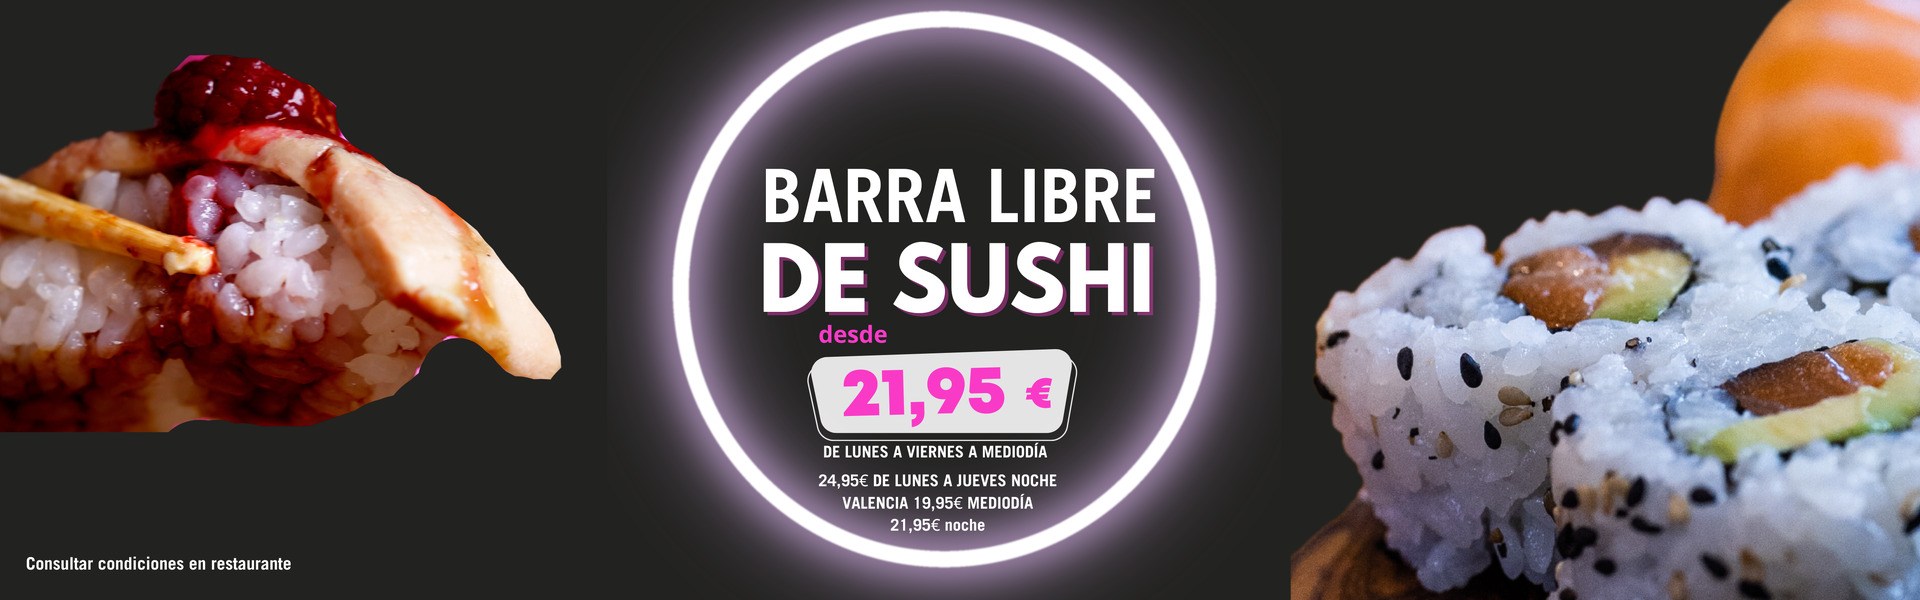 Barra libre de sushi 2